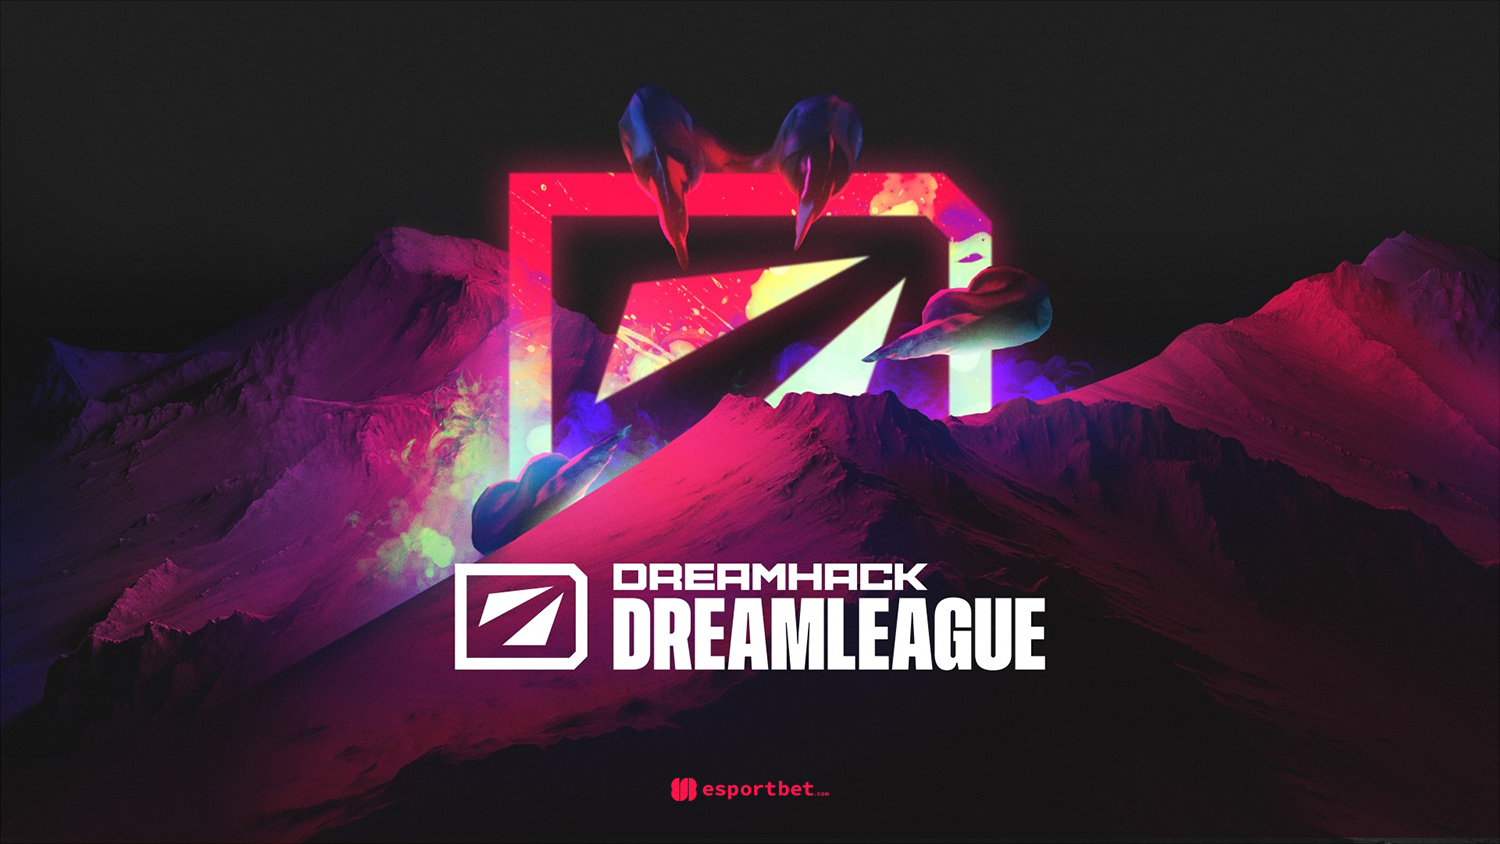 DreamHack DreamLeague betting guide